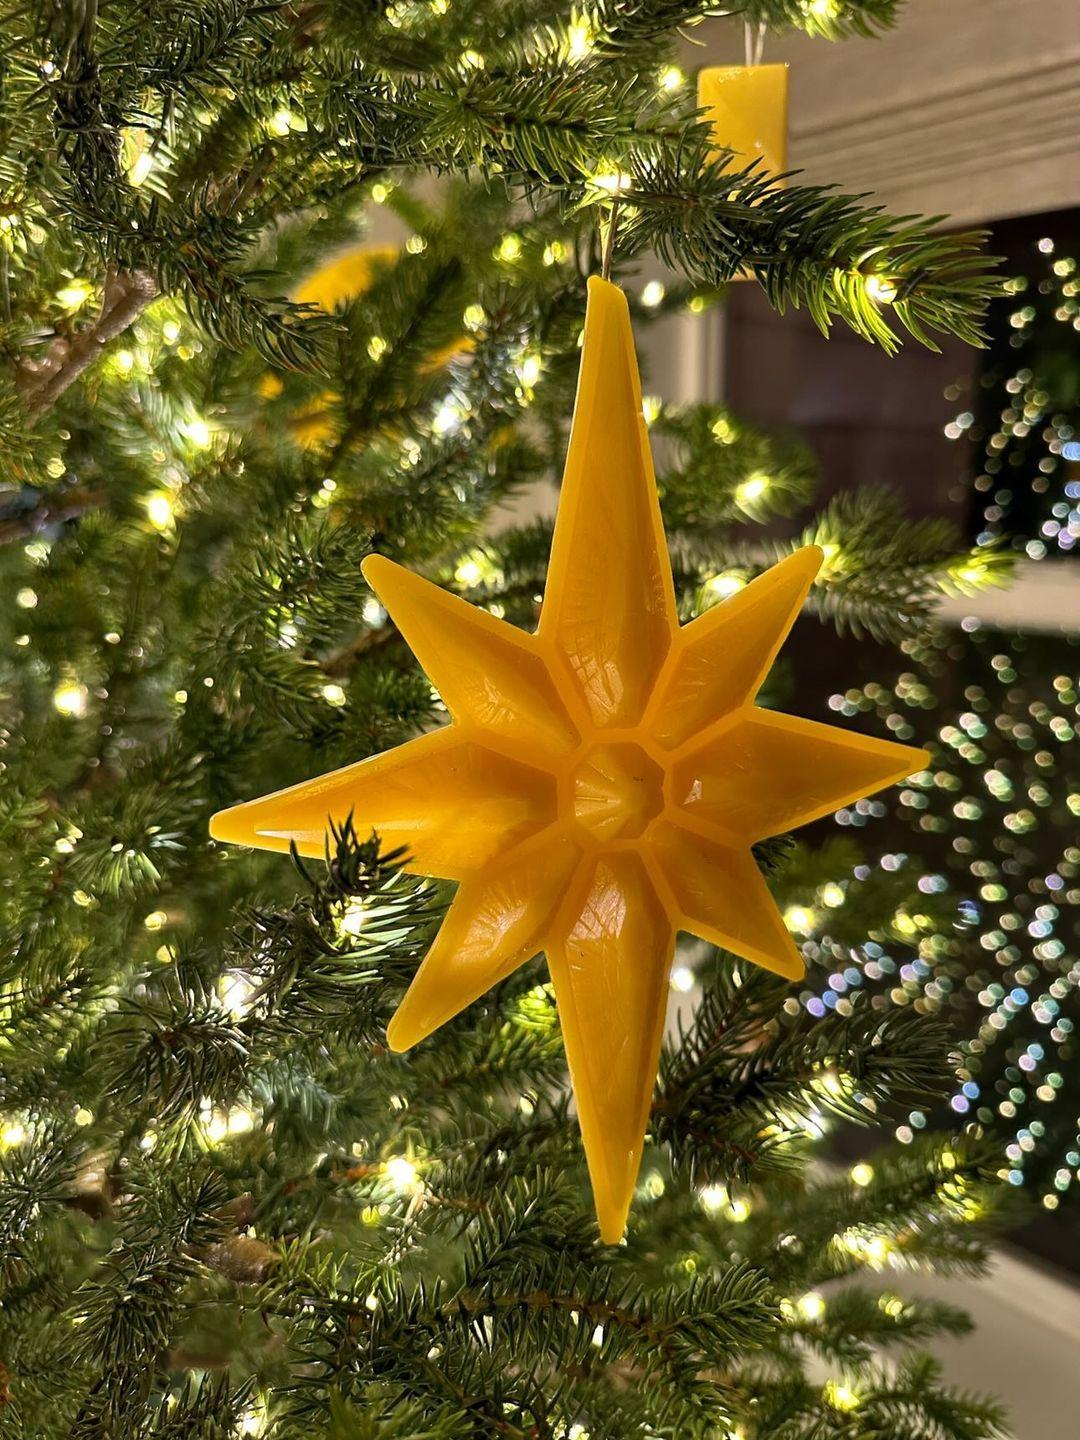 The Christmas Star Ornament